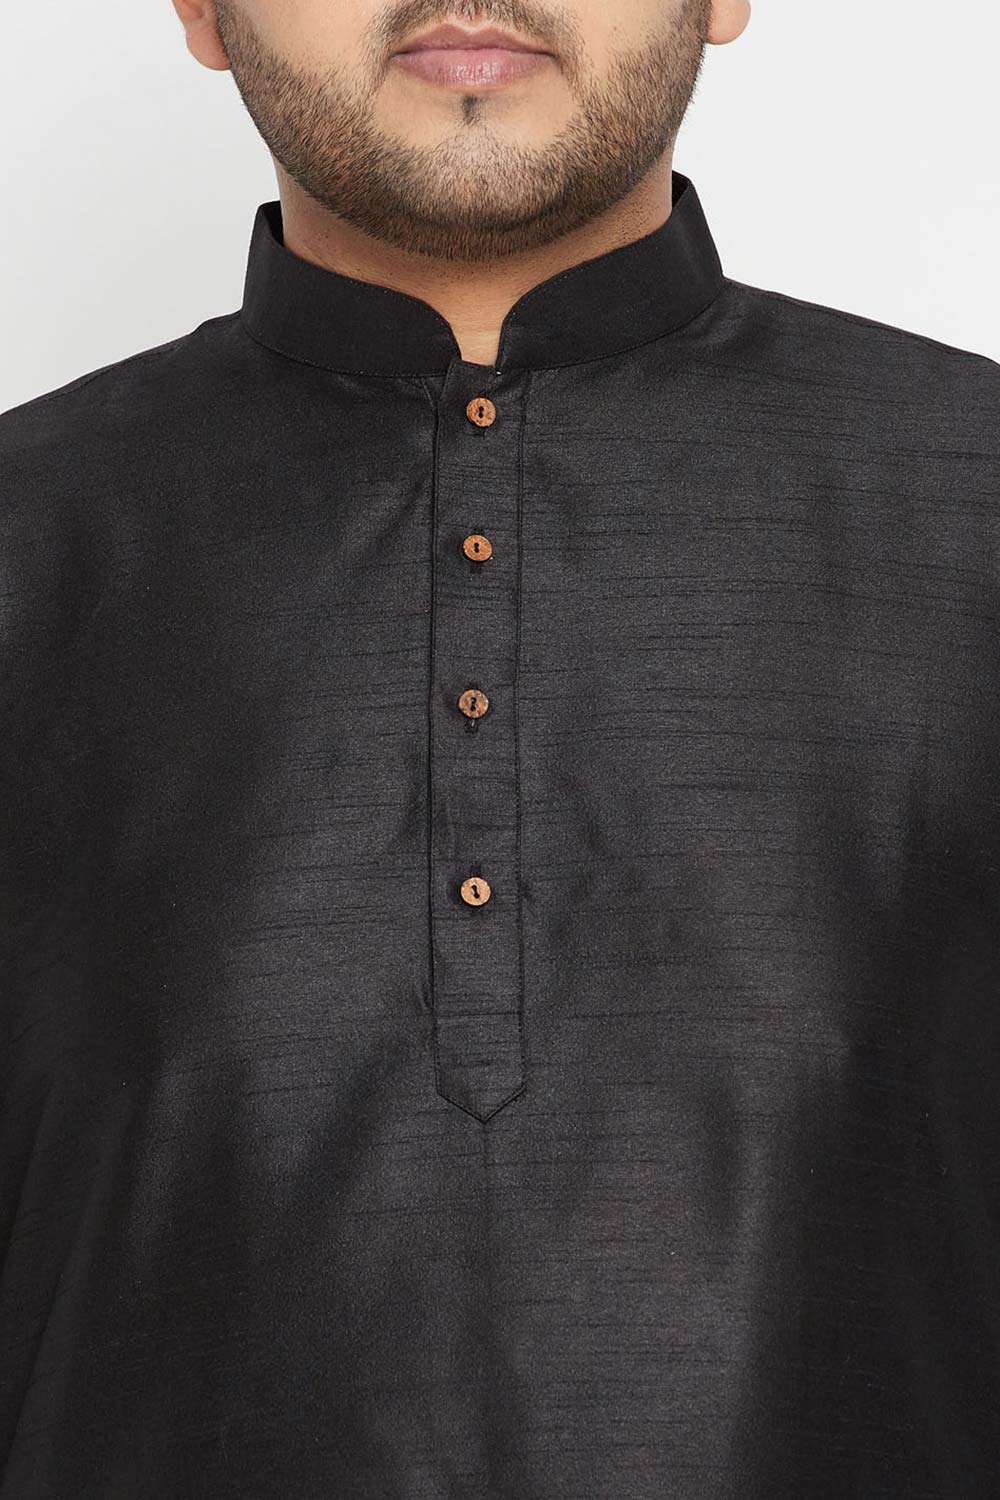 Buy Men's Silk Blend Woven Design Sherwani Set in Black - Zoom Out